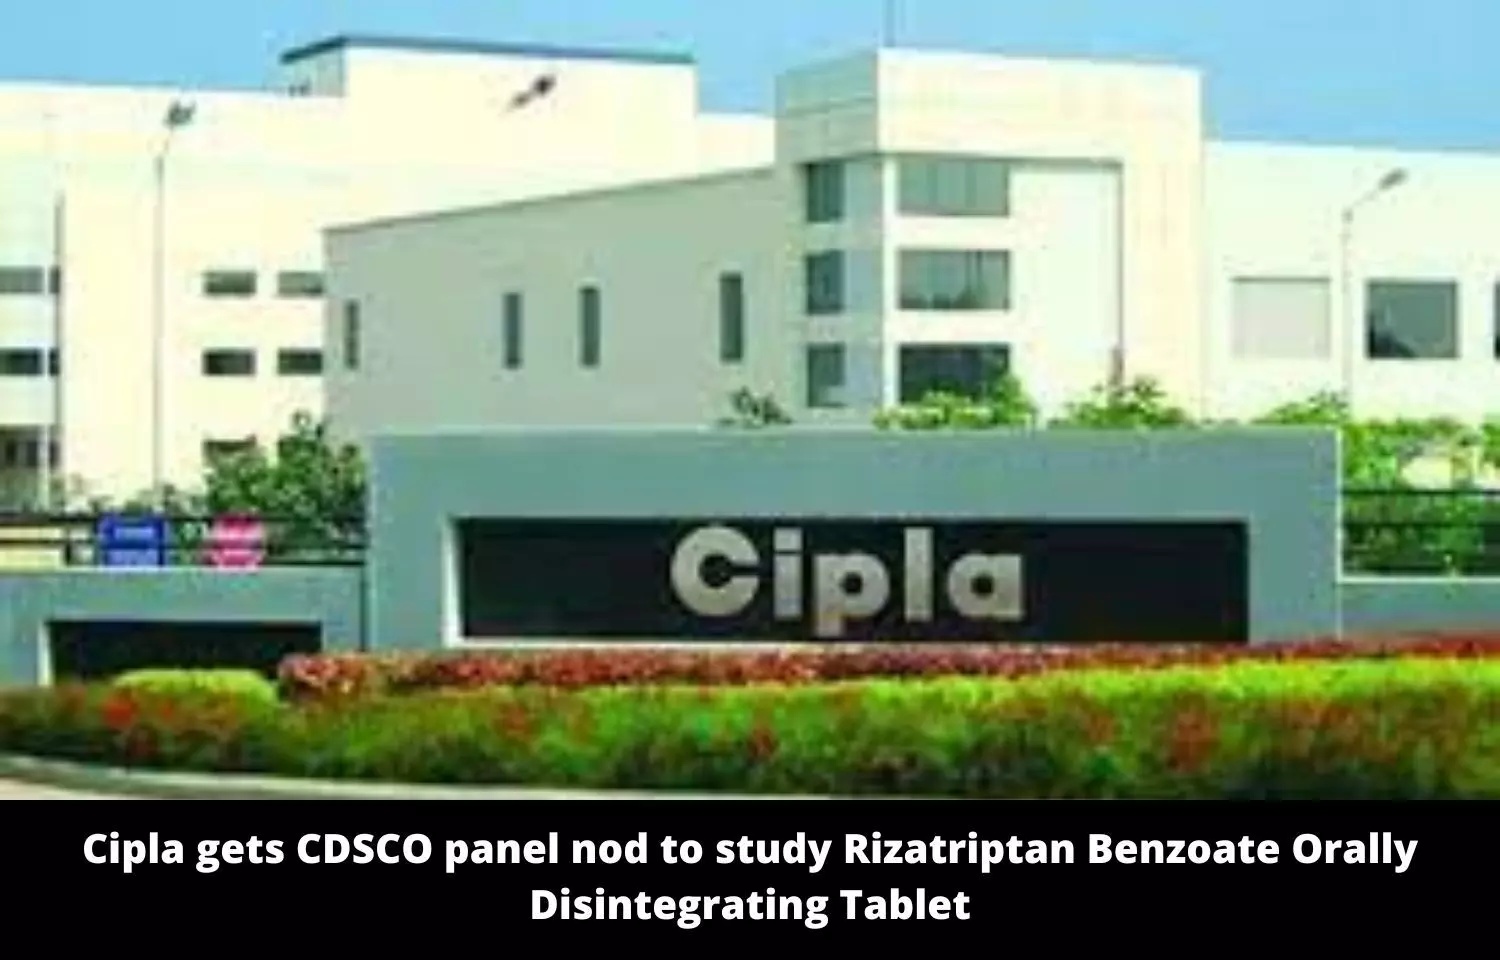 Cipla gets CDSCO panel nod to study Rizatriptan Benzoate Orally Disintegrating Tablet